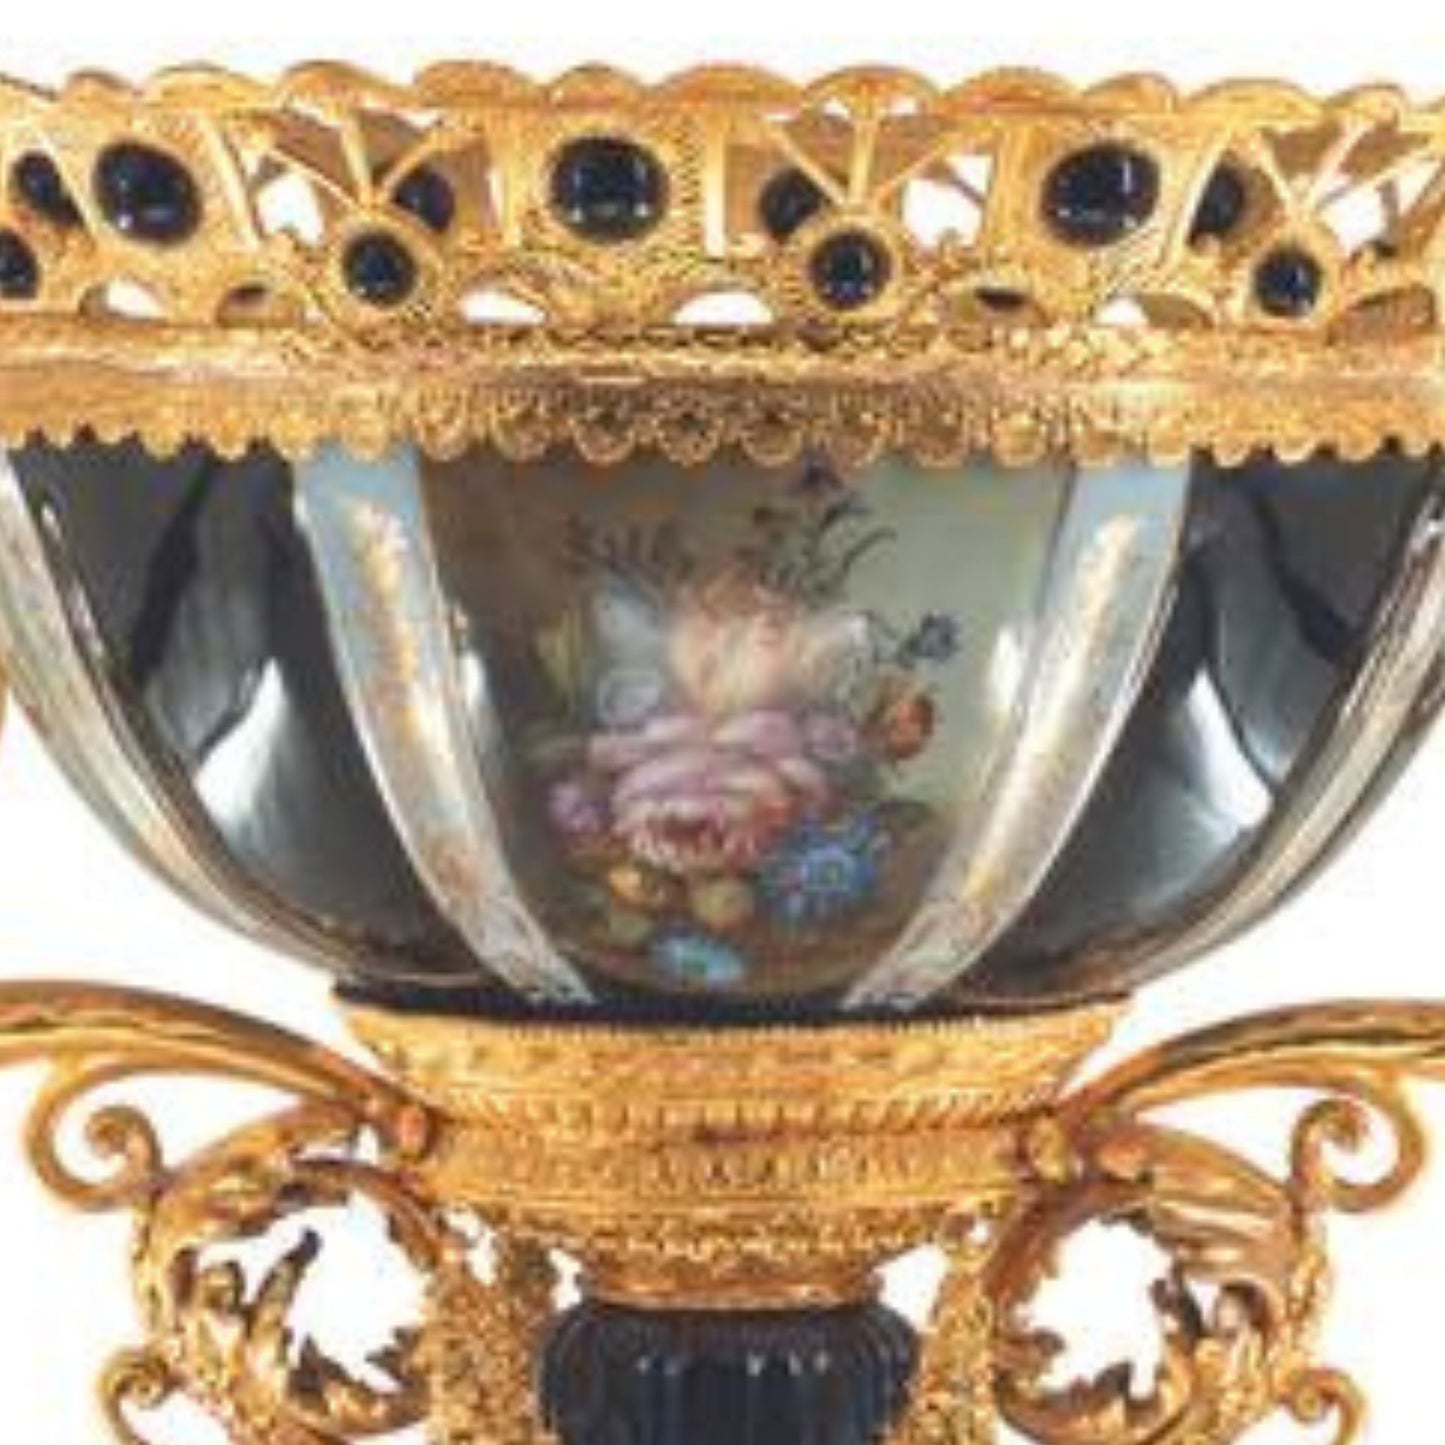 Porcelain Decorative Hand-Painted Center Piece Bowl & Candelabra